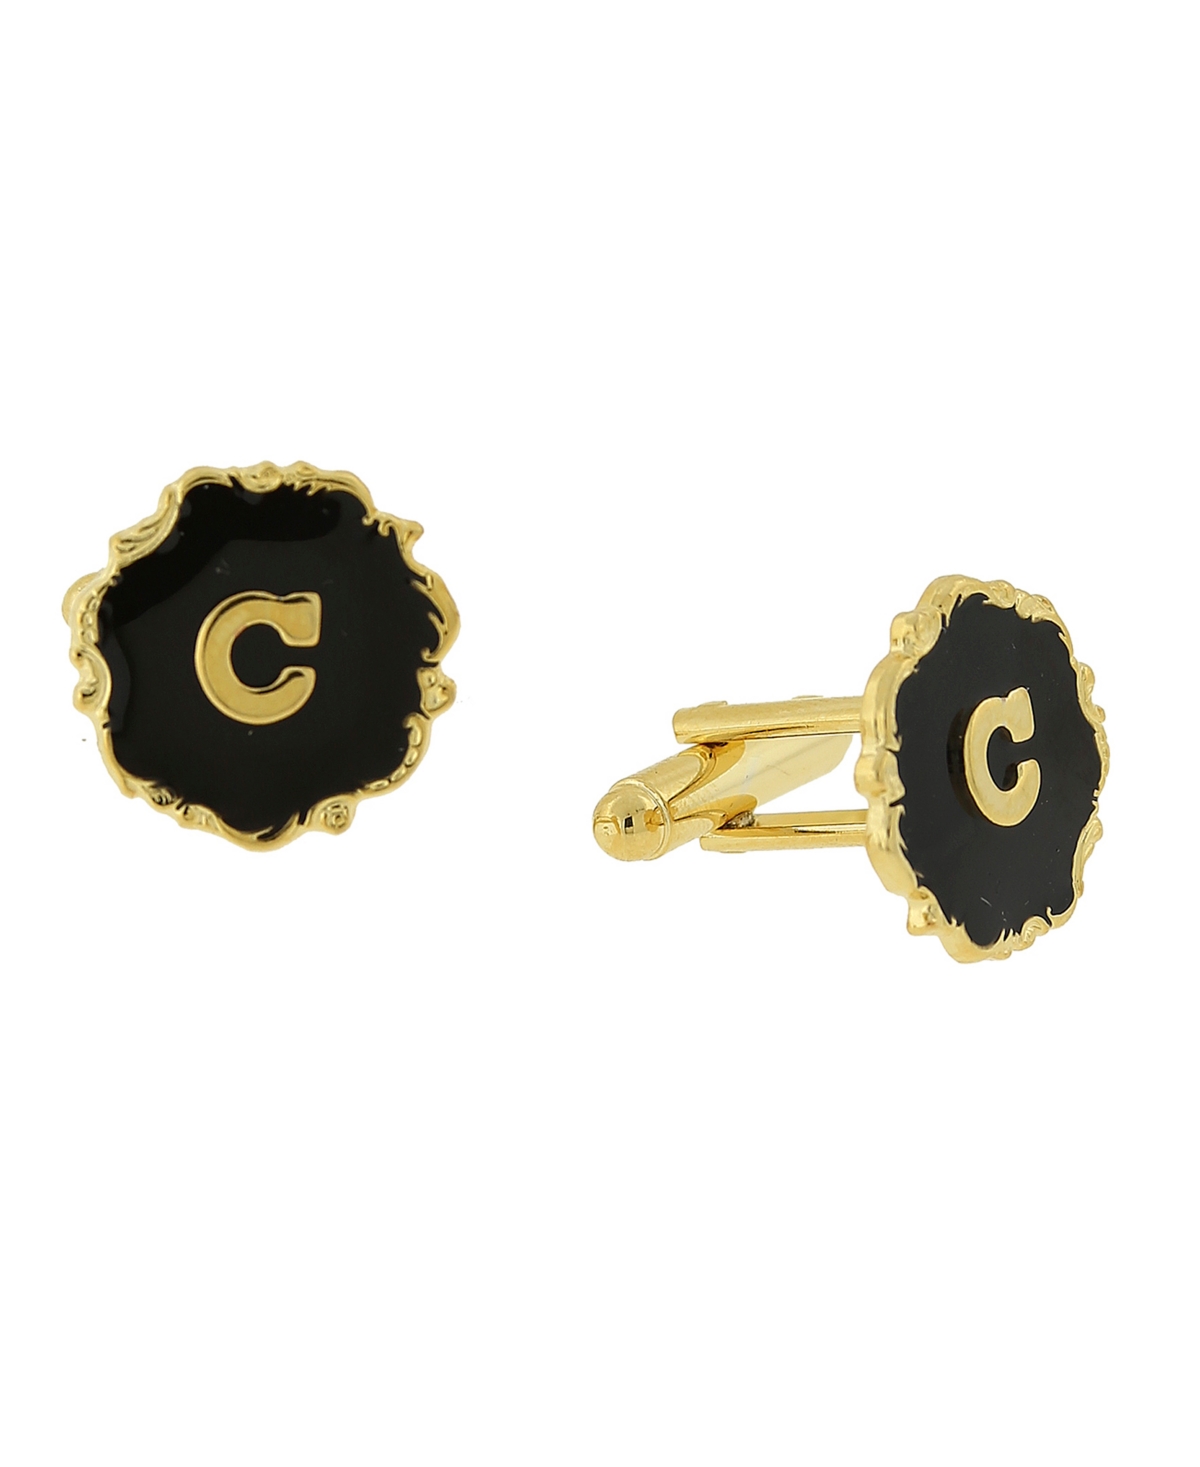 Jewelry 14K Gold-Plated Enamel Initial C Cufflinks - Black